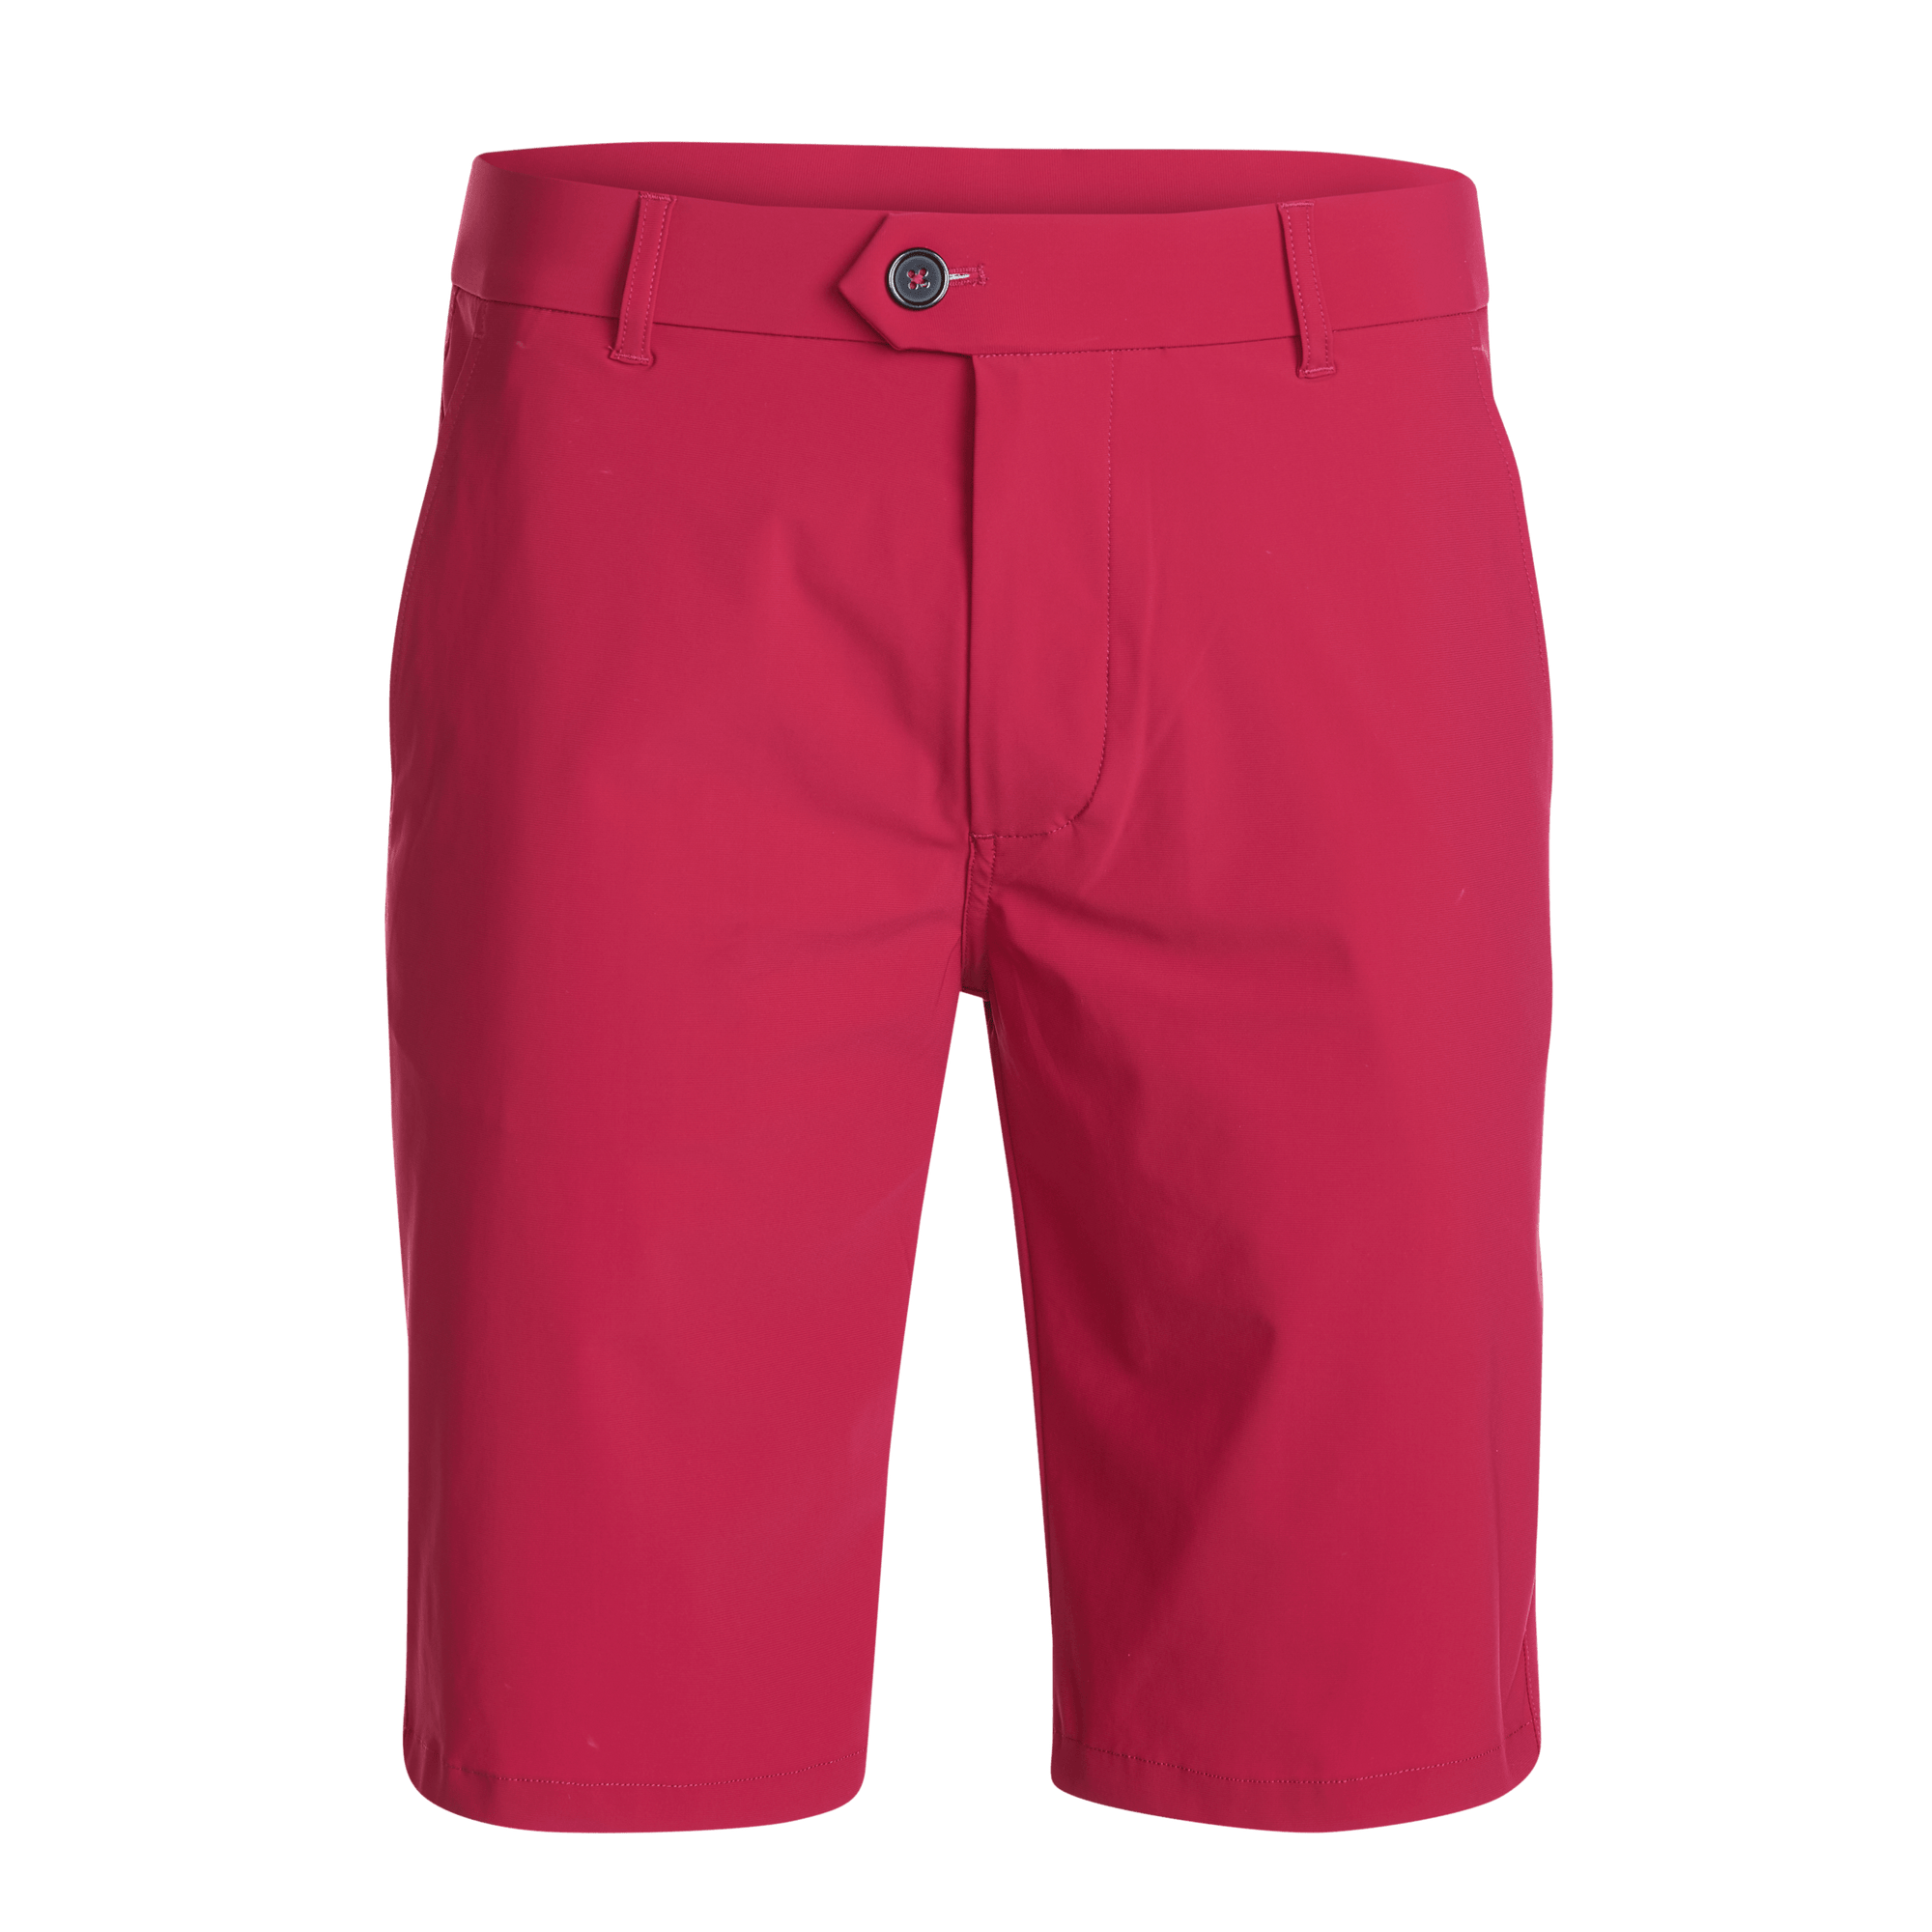 Montauk Short - Sugarcane | Greyson Clothiers